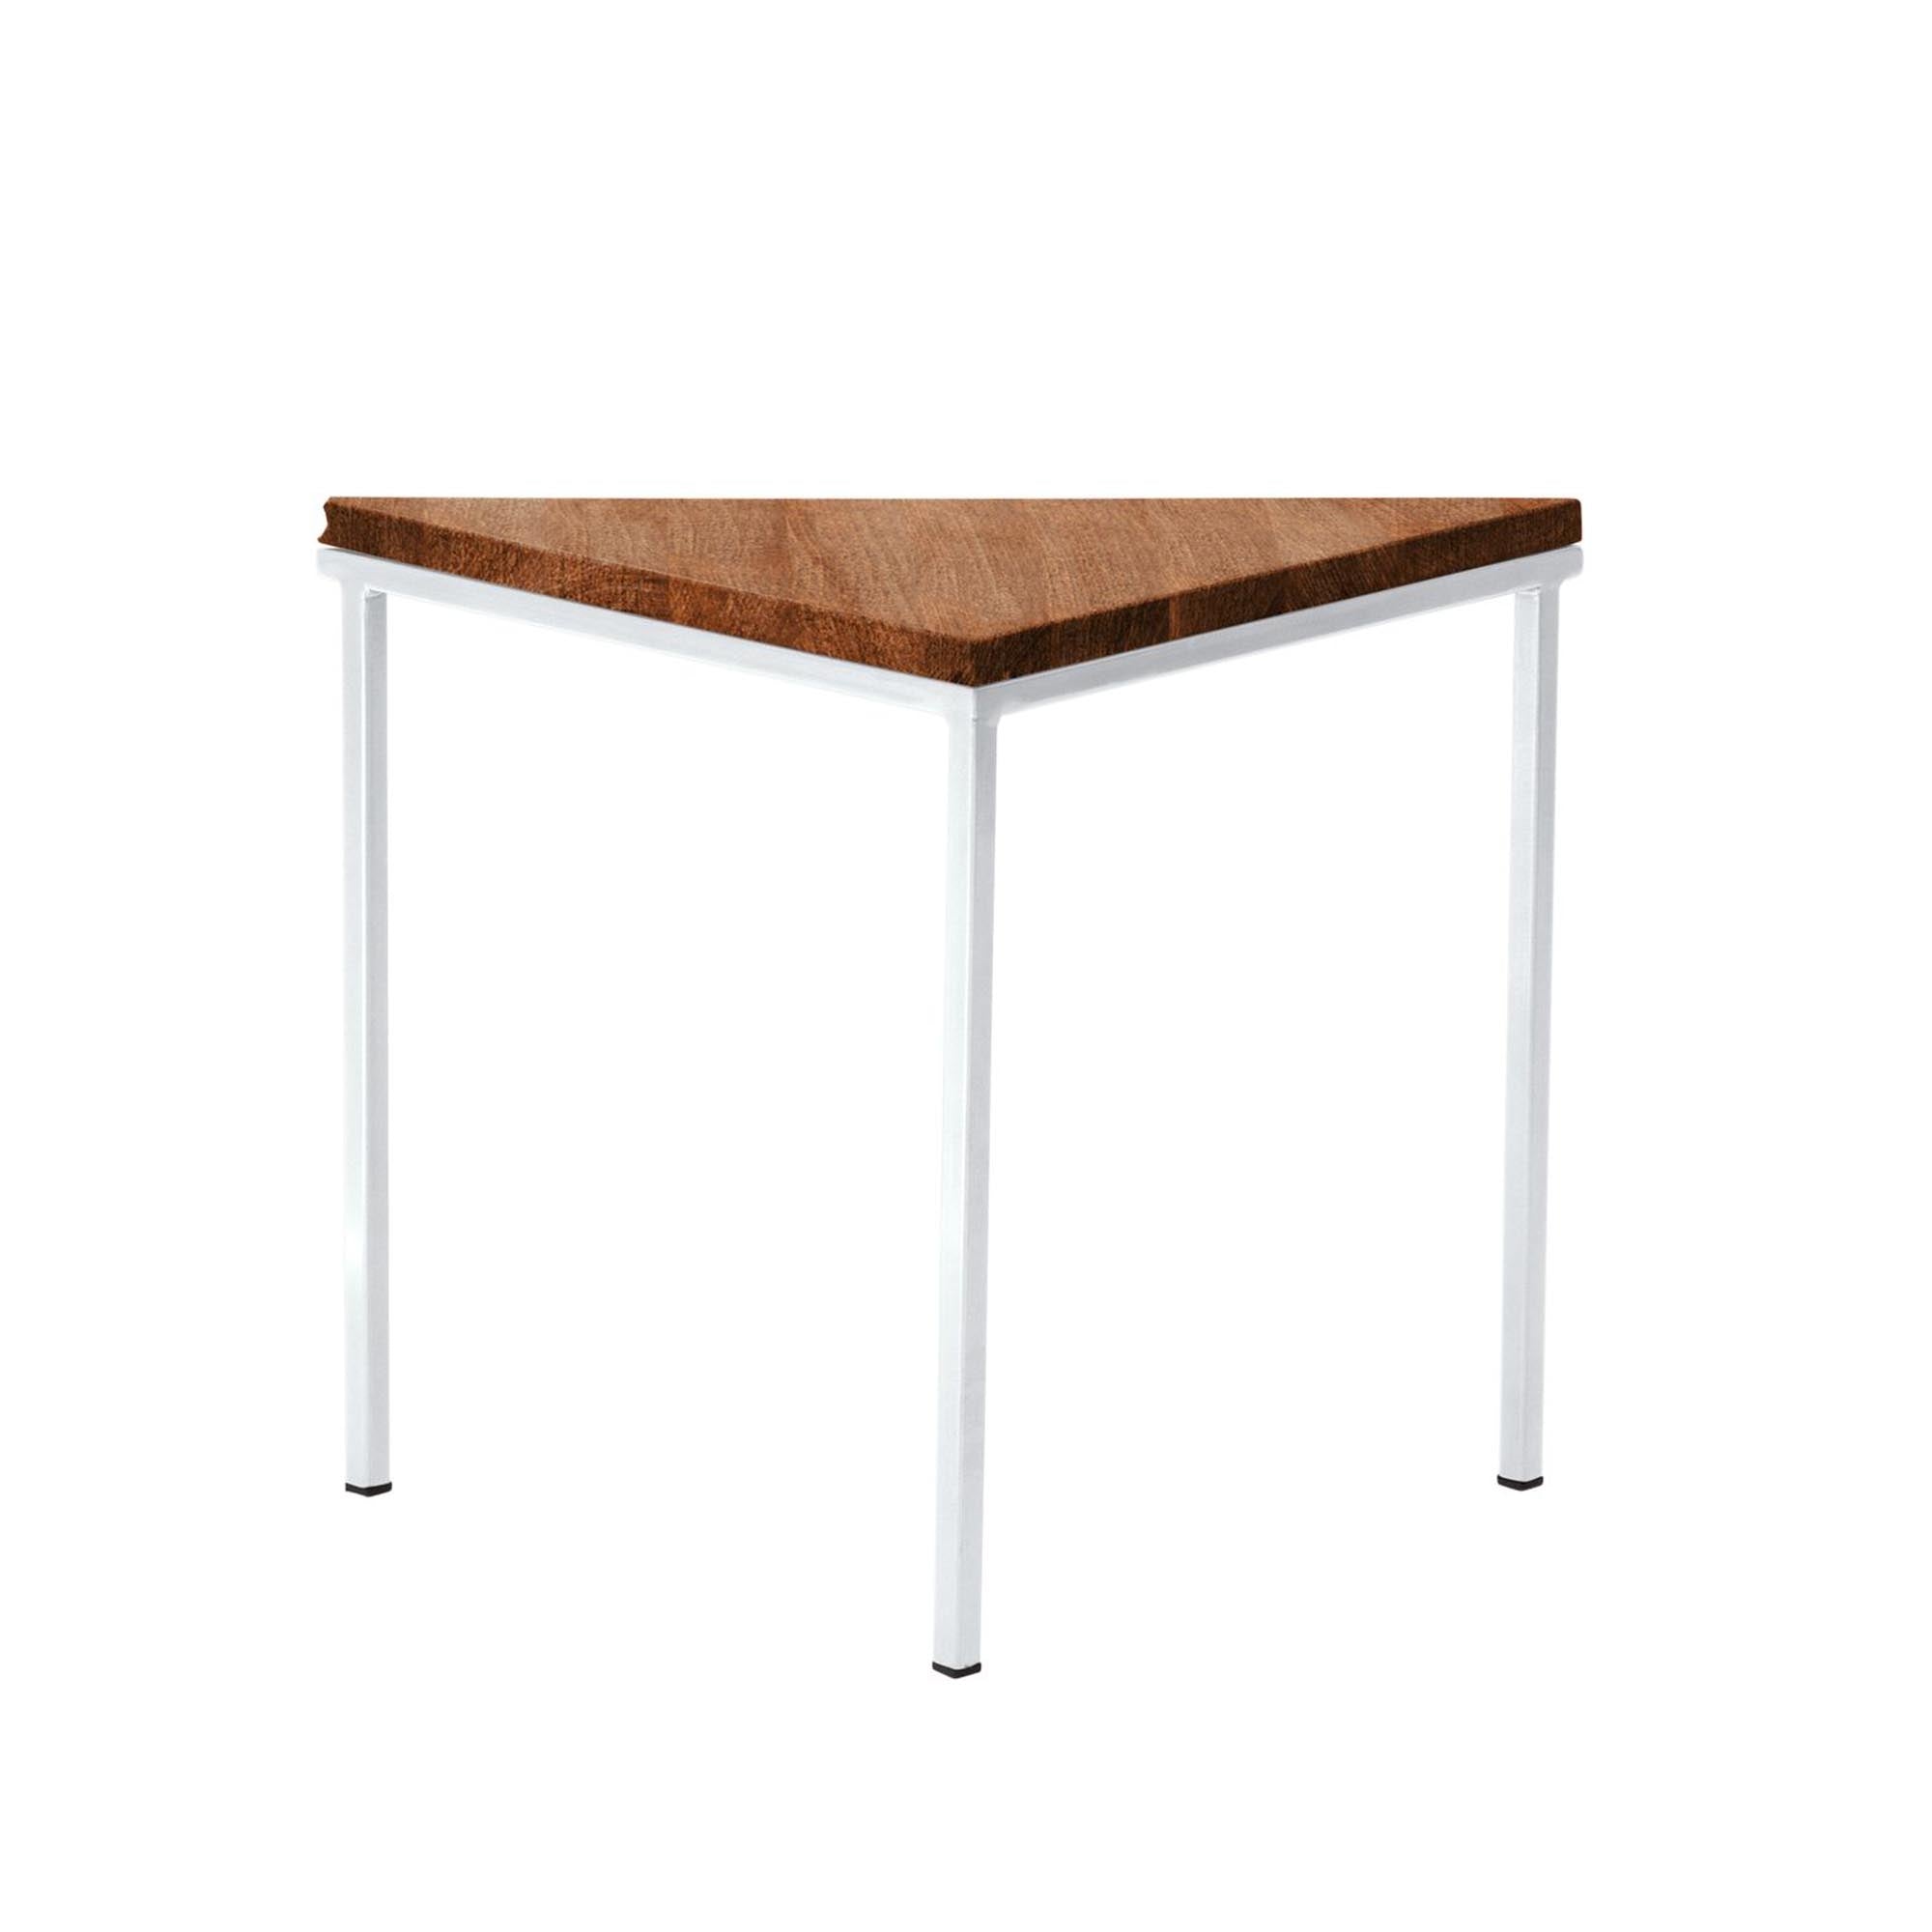 Tripod Table, Beech Wood, Walnut Colour white frame, side view